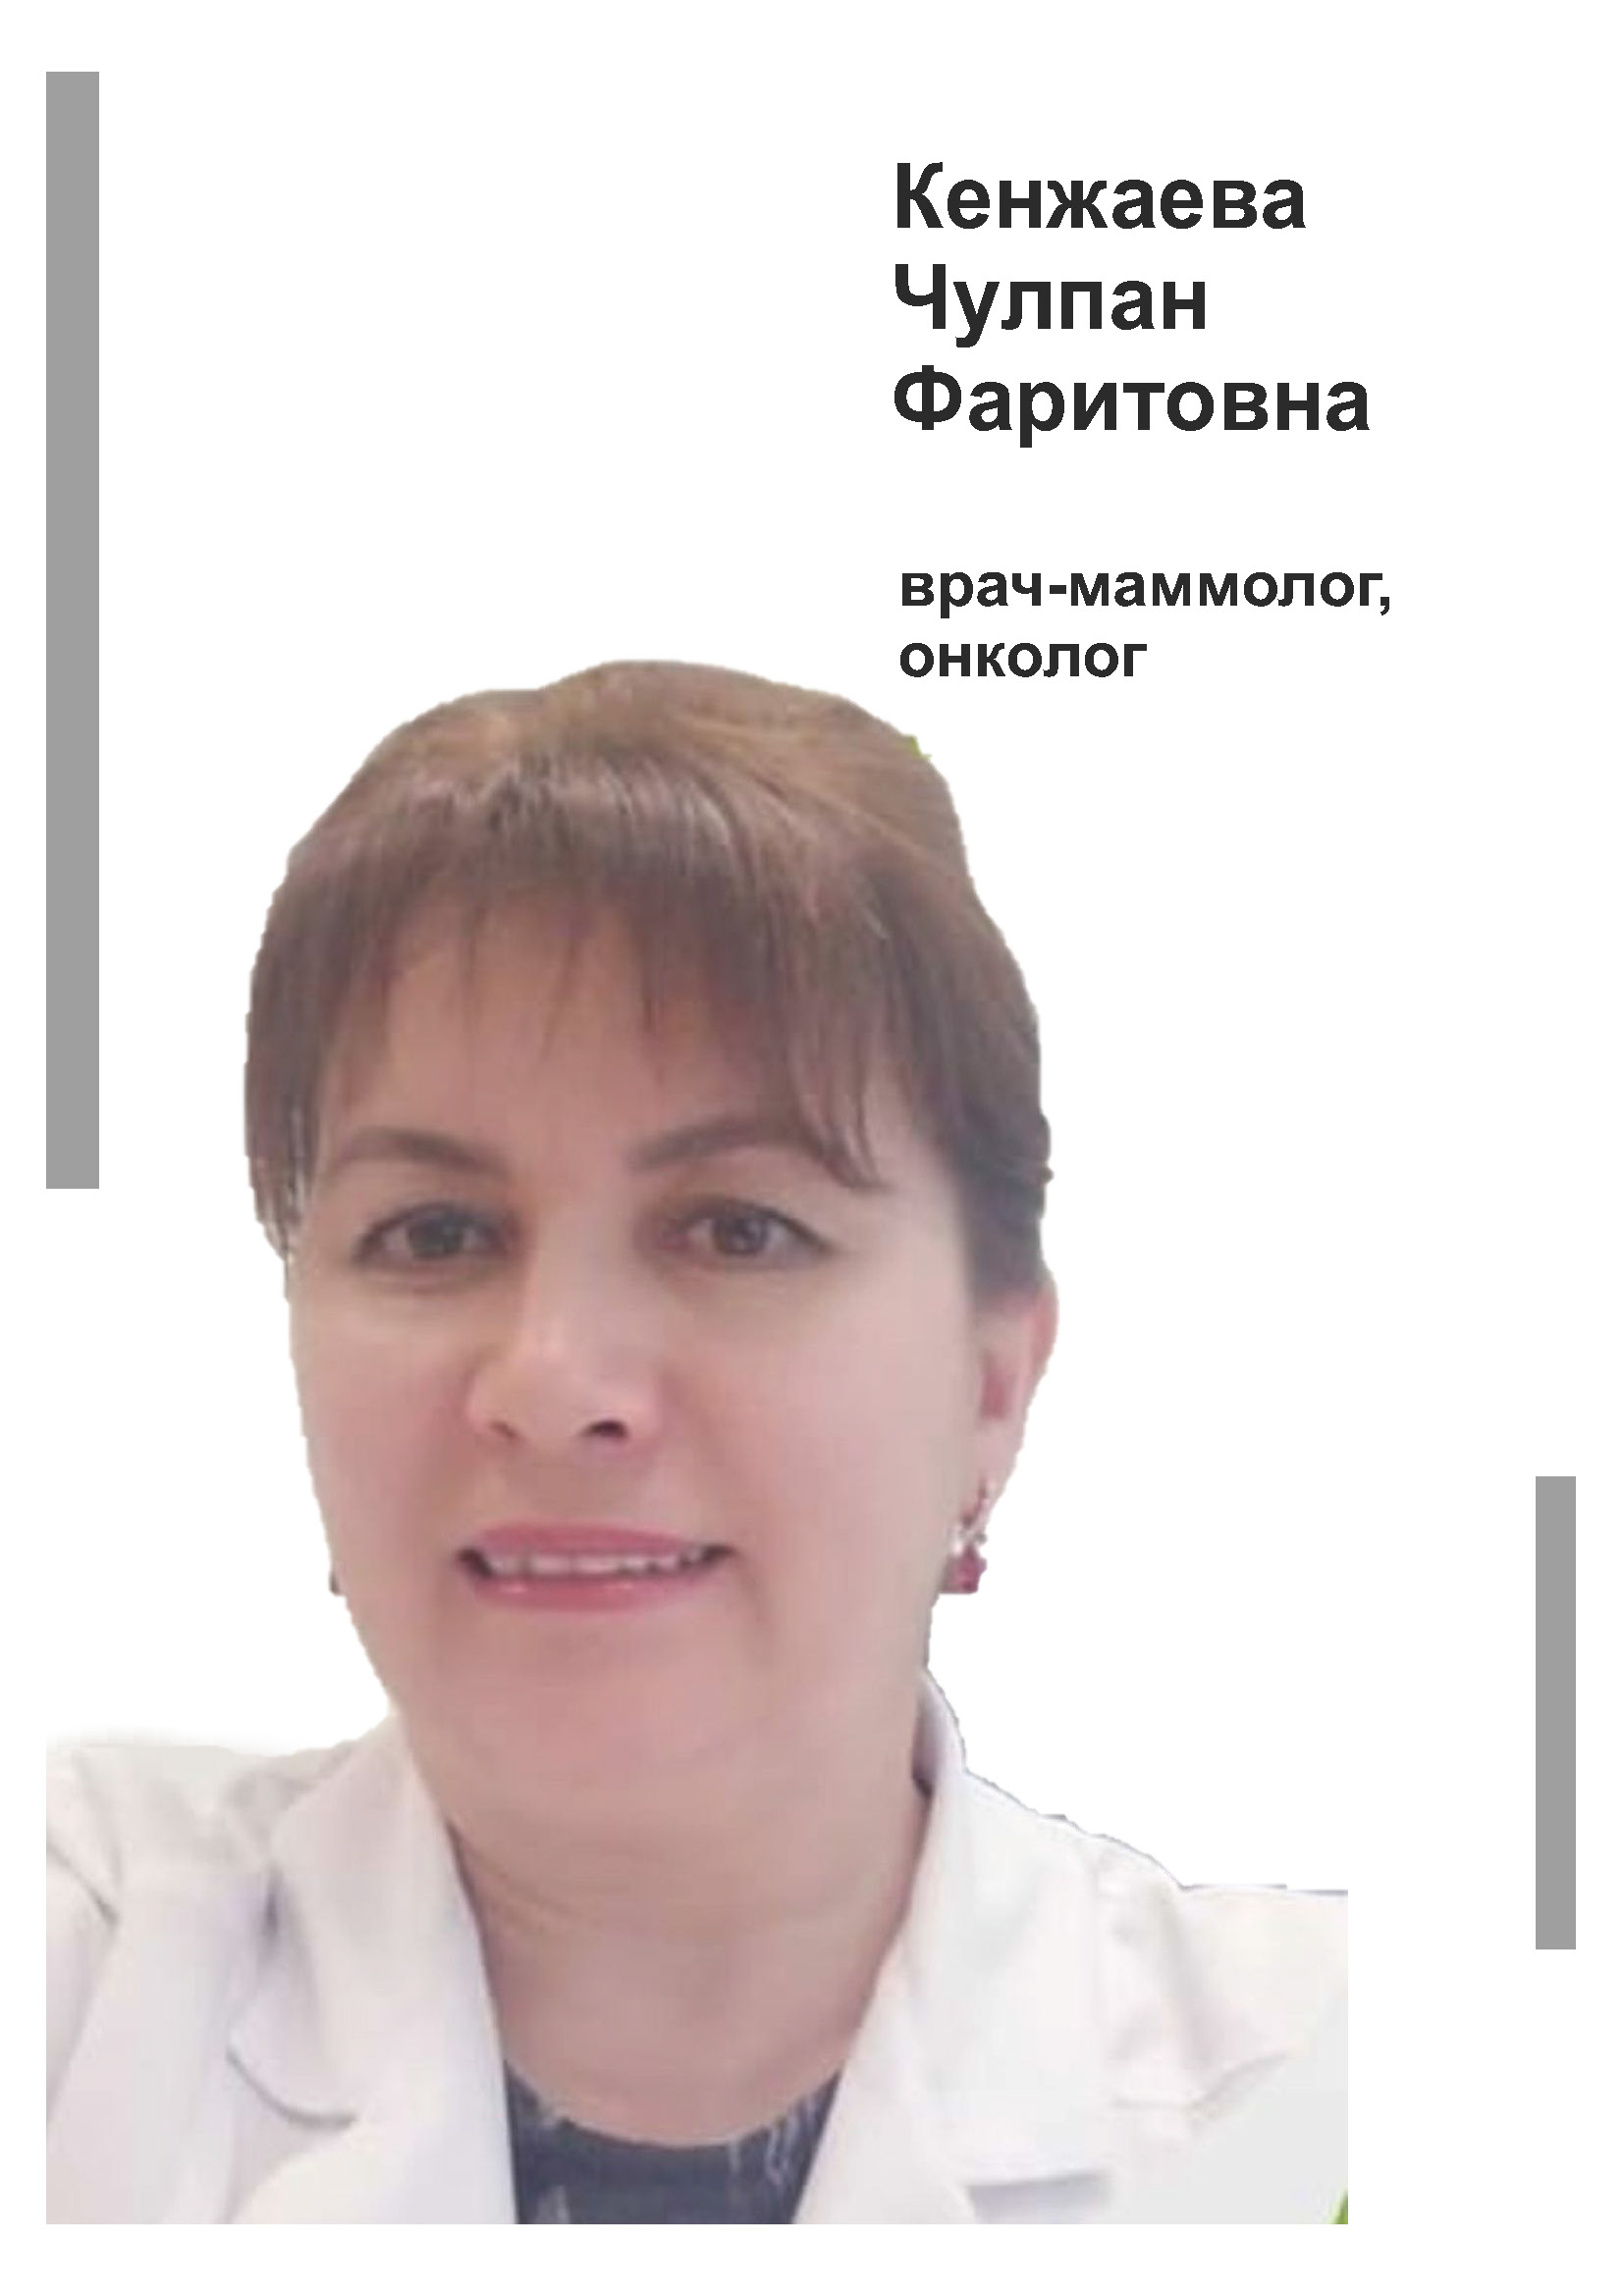 Кенжаева Чулпан Фаритовна, Врач-маммолог, онколог в клинике Lezaffe г. Югорск